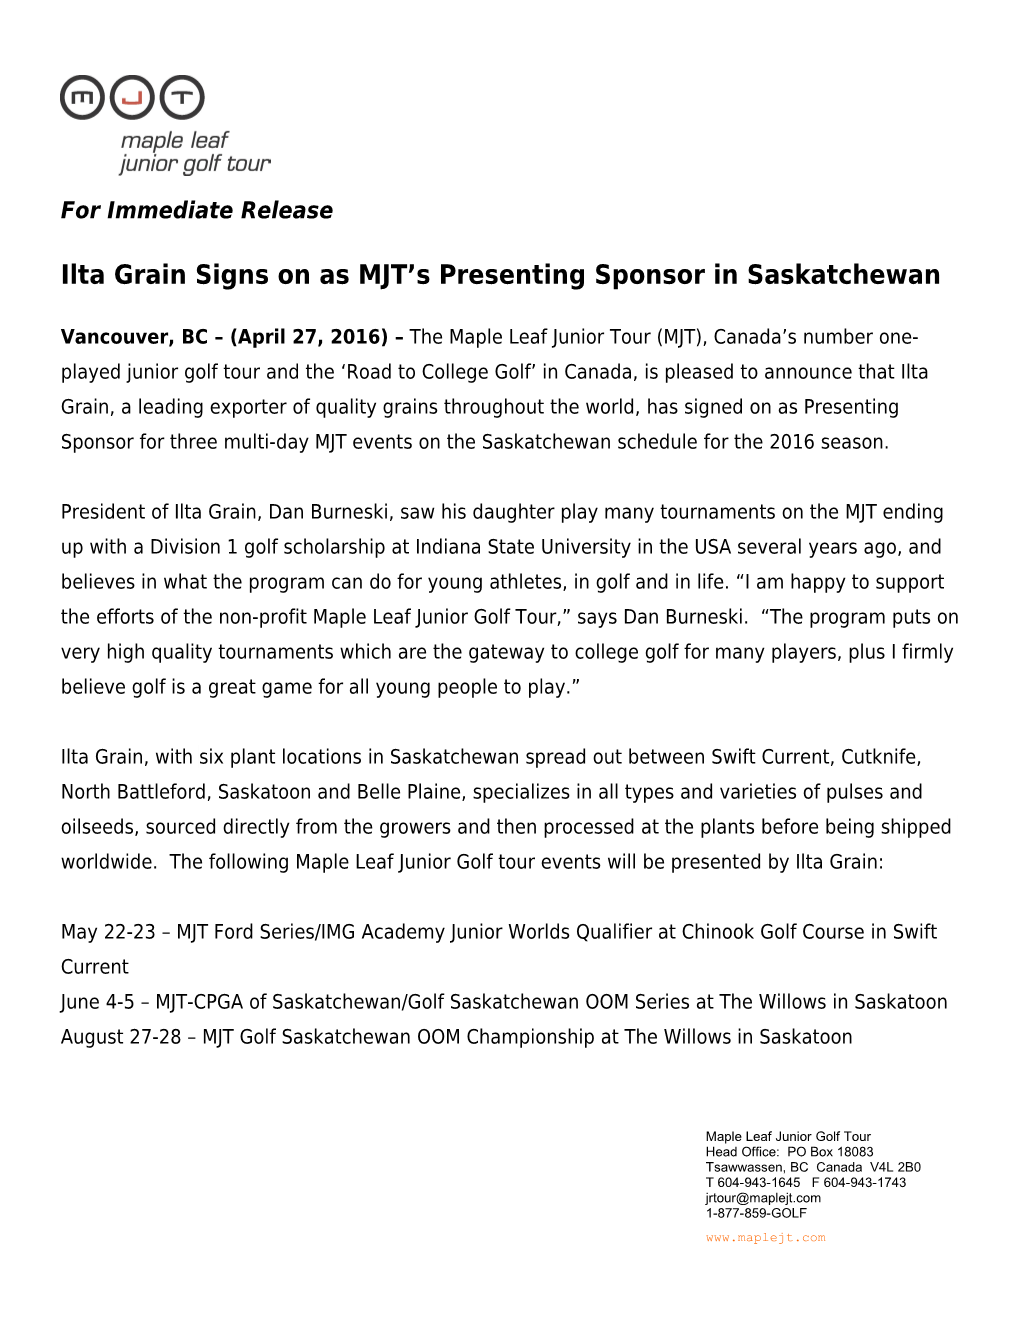 Ilta Grain Signs on As MJT S Presenting Sponsorin Saskatchewan